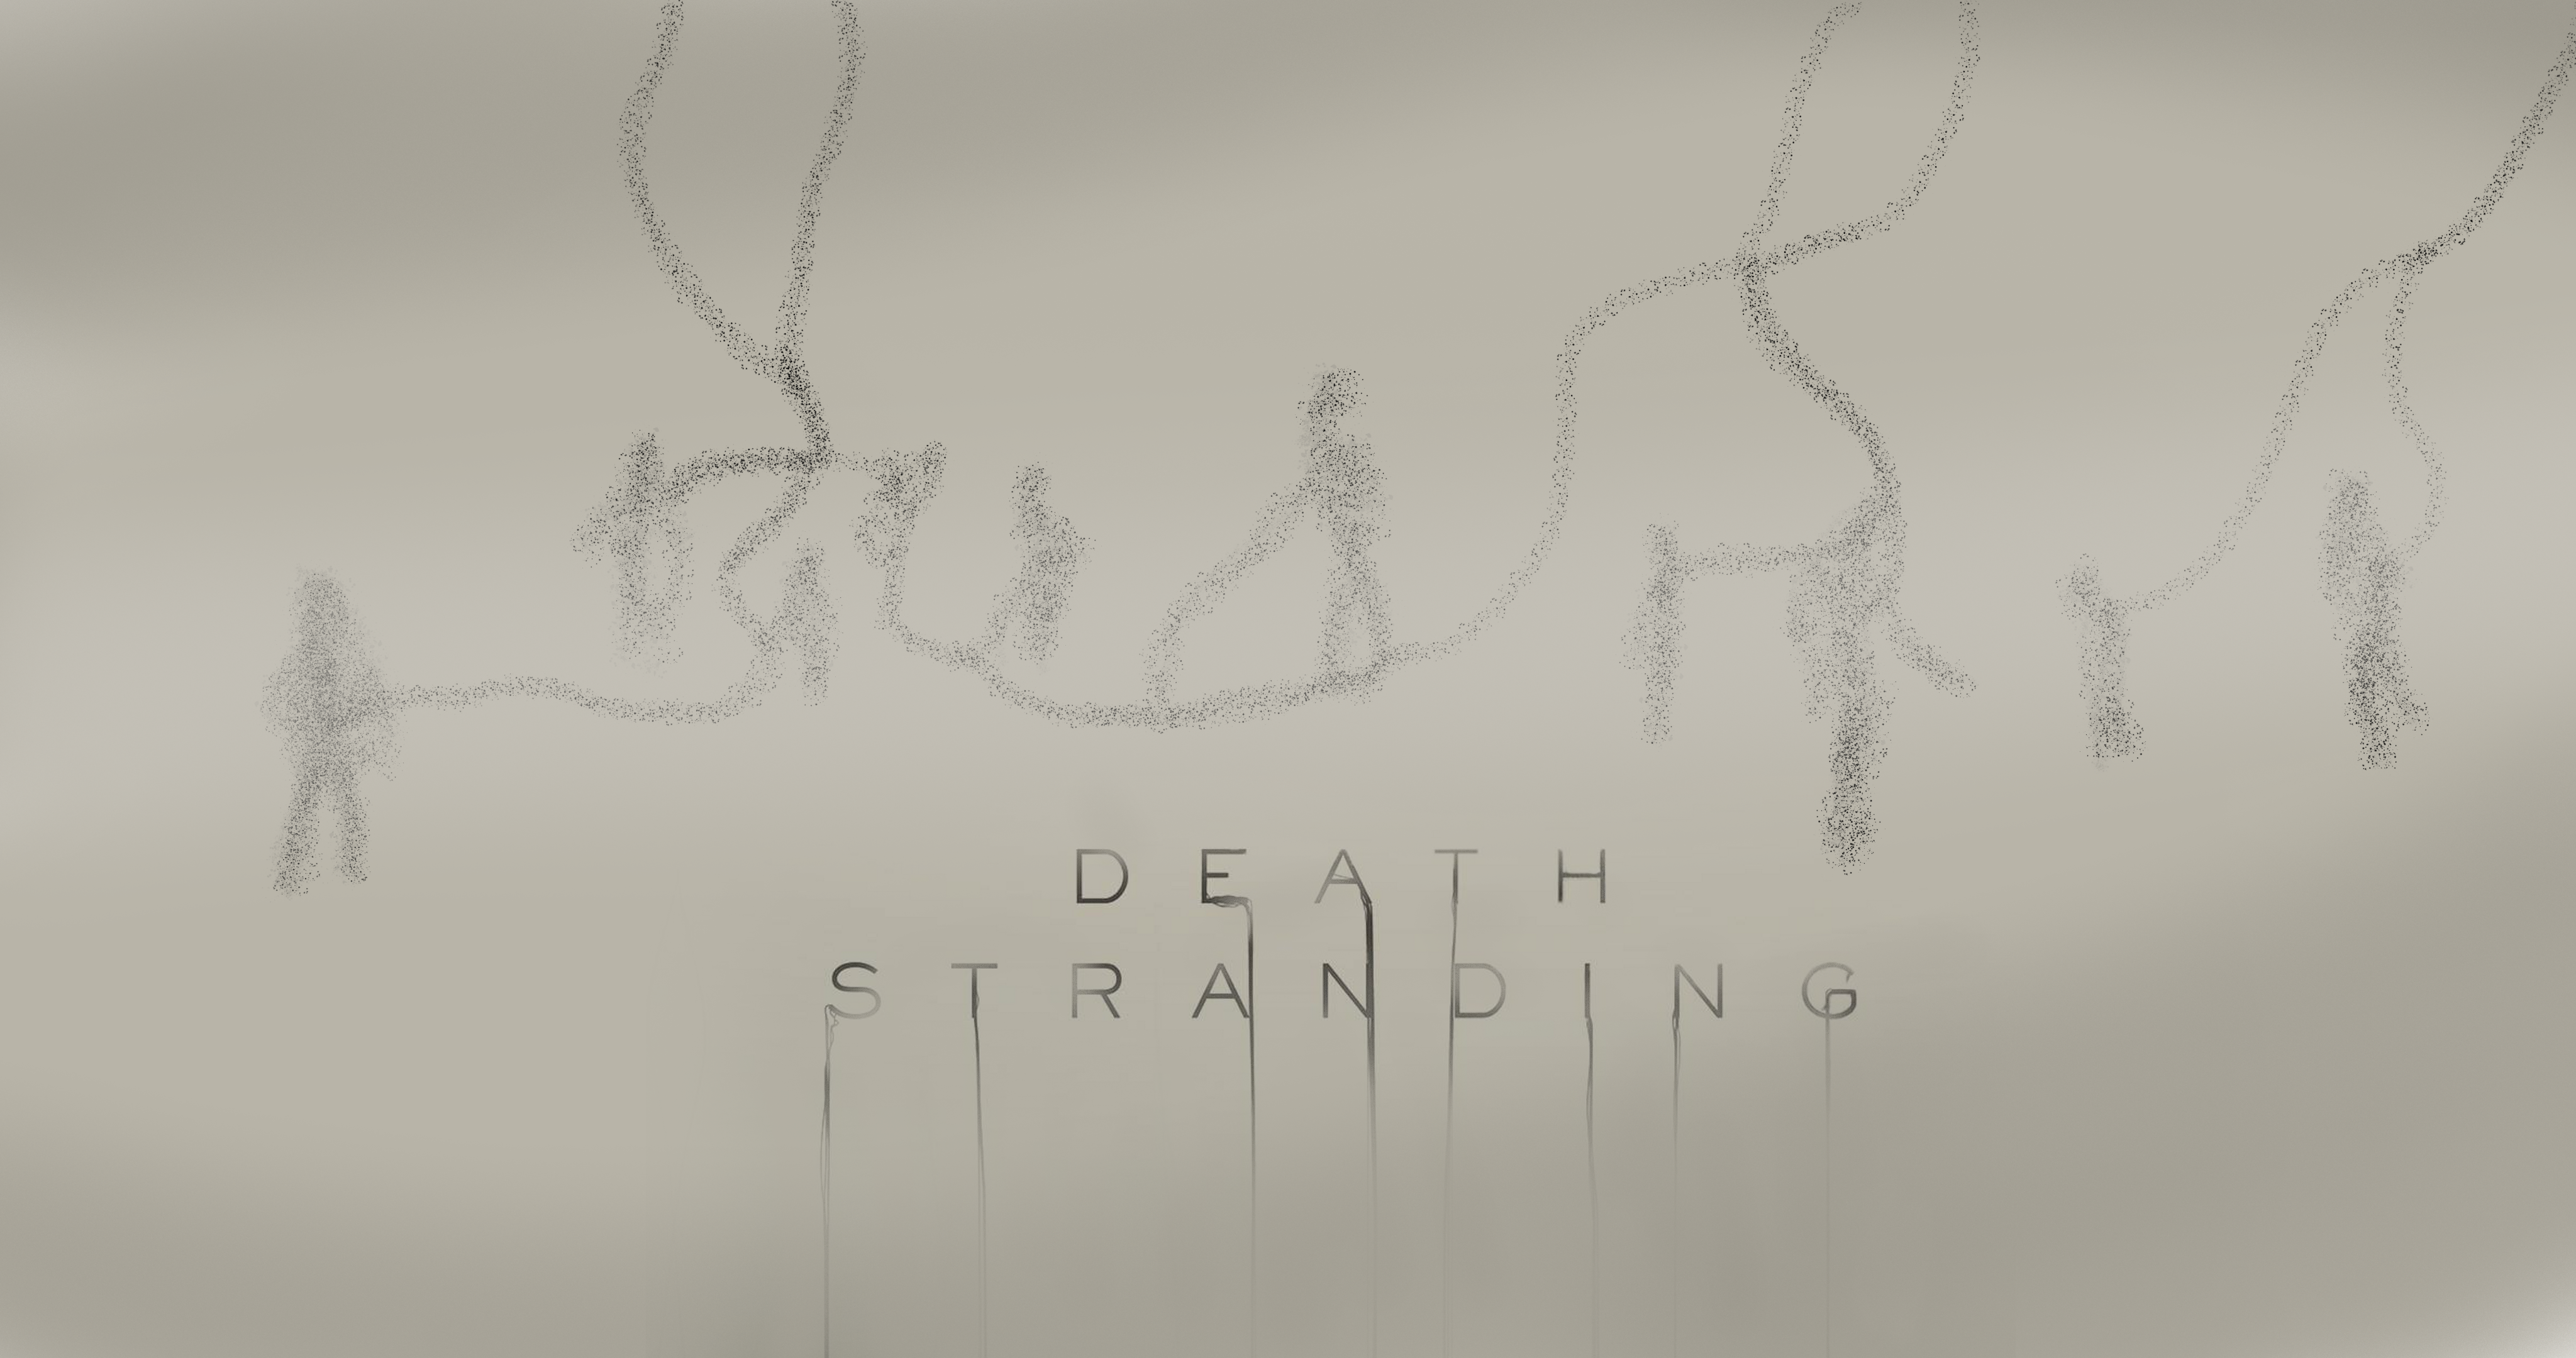 Death Stranding BT Wallpaper 4k (no name) by Zombietacooo on DeviantArt